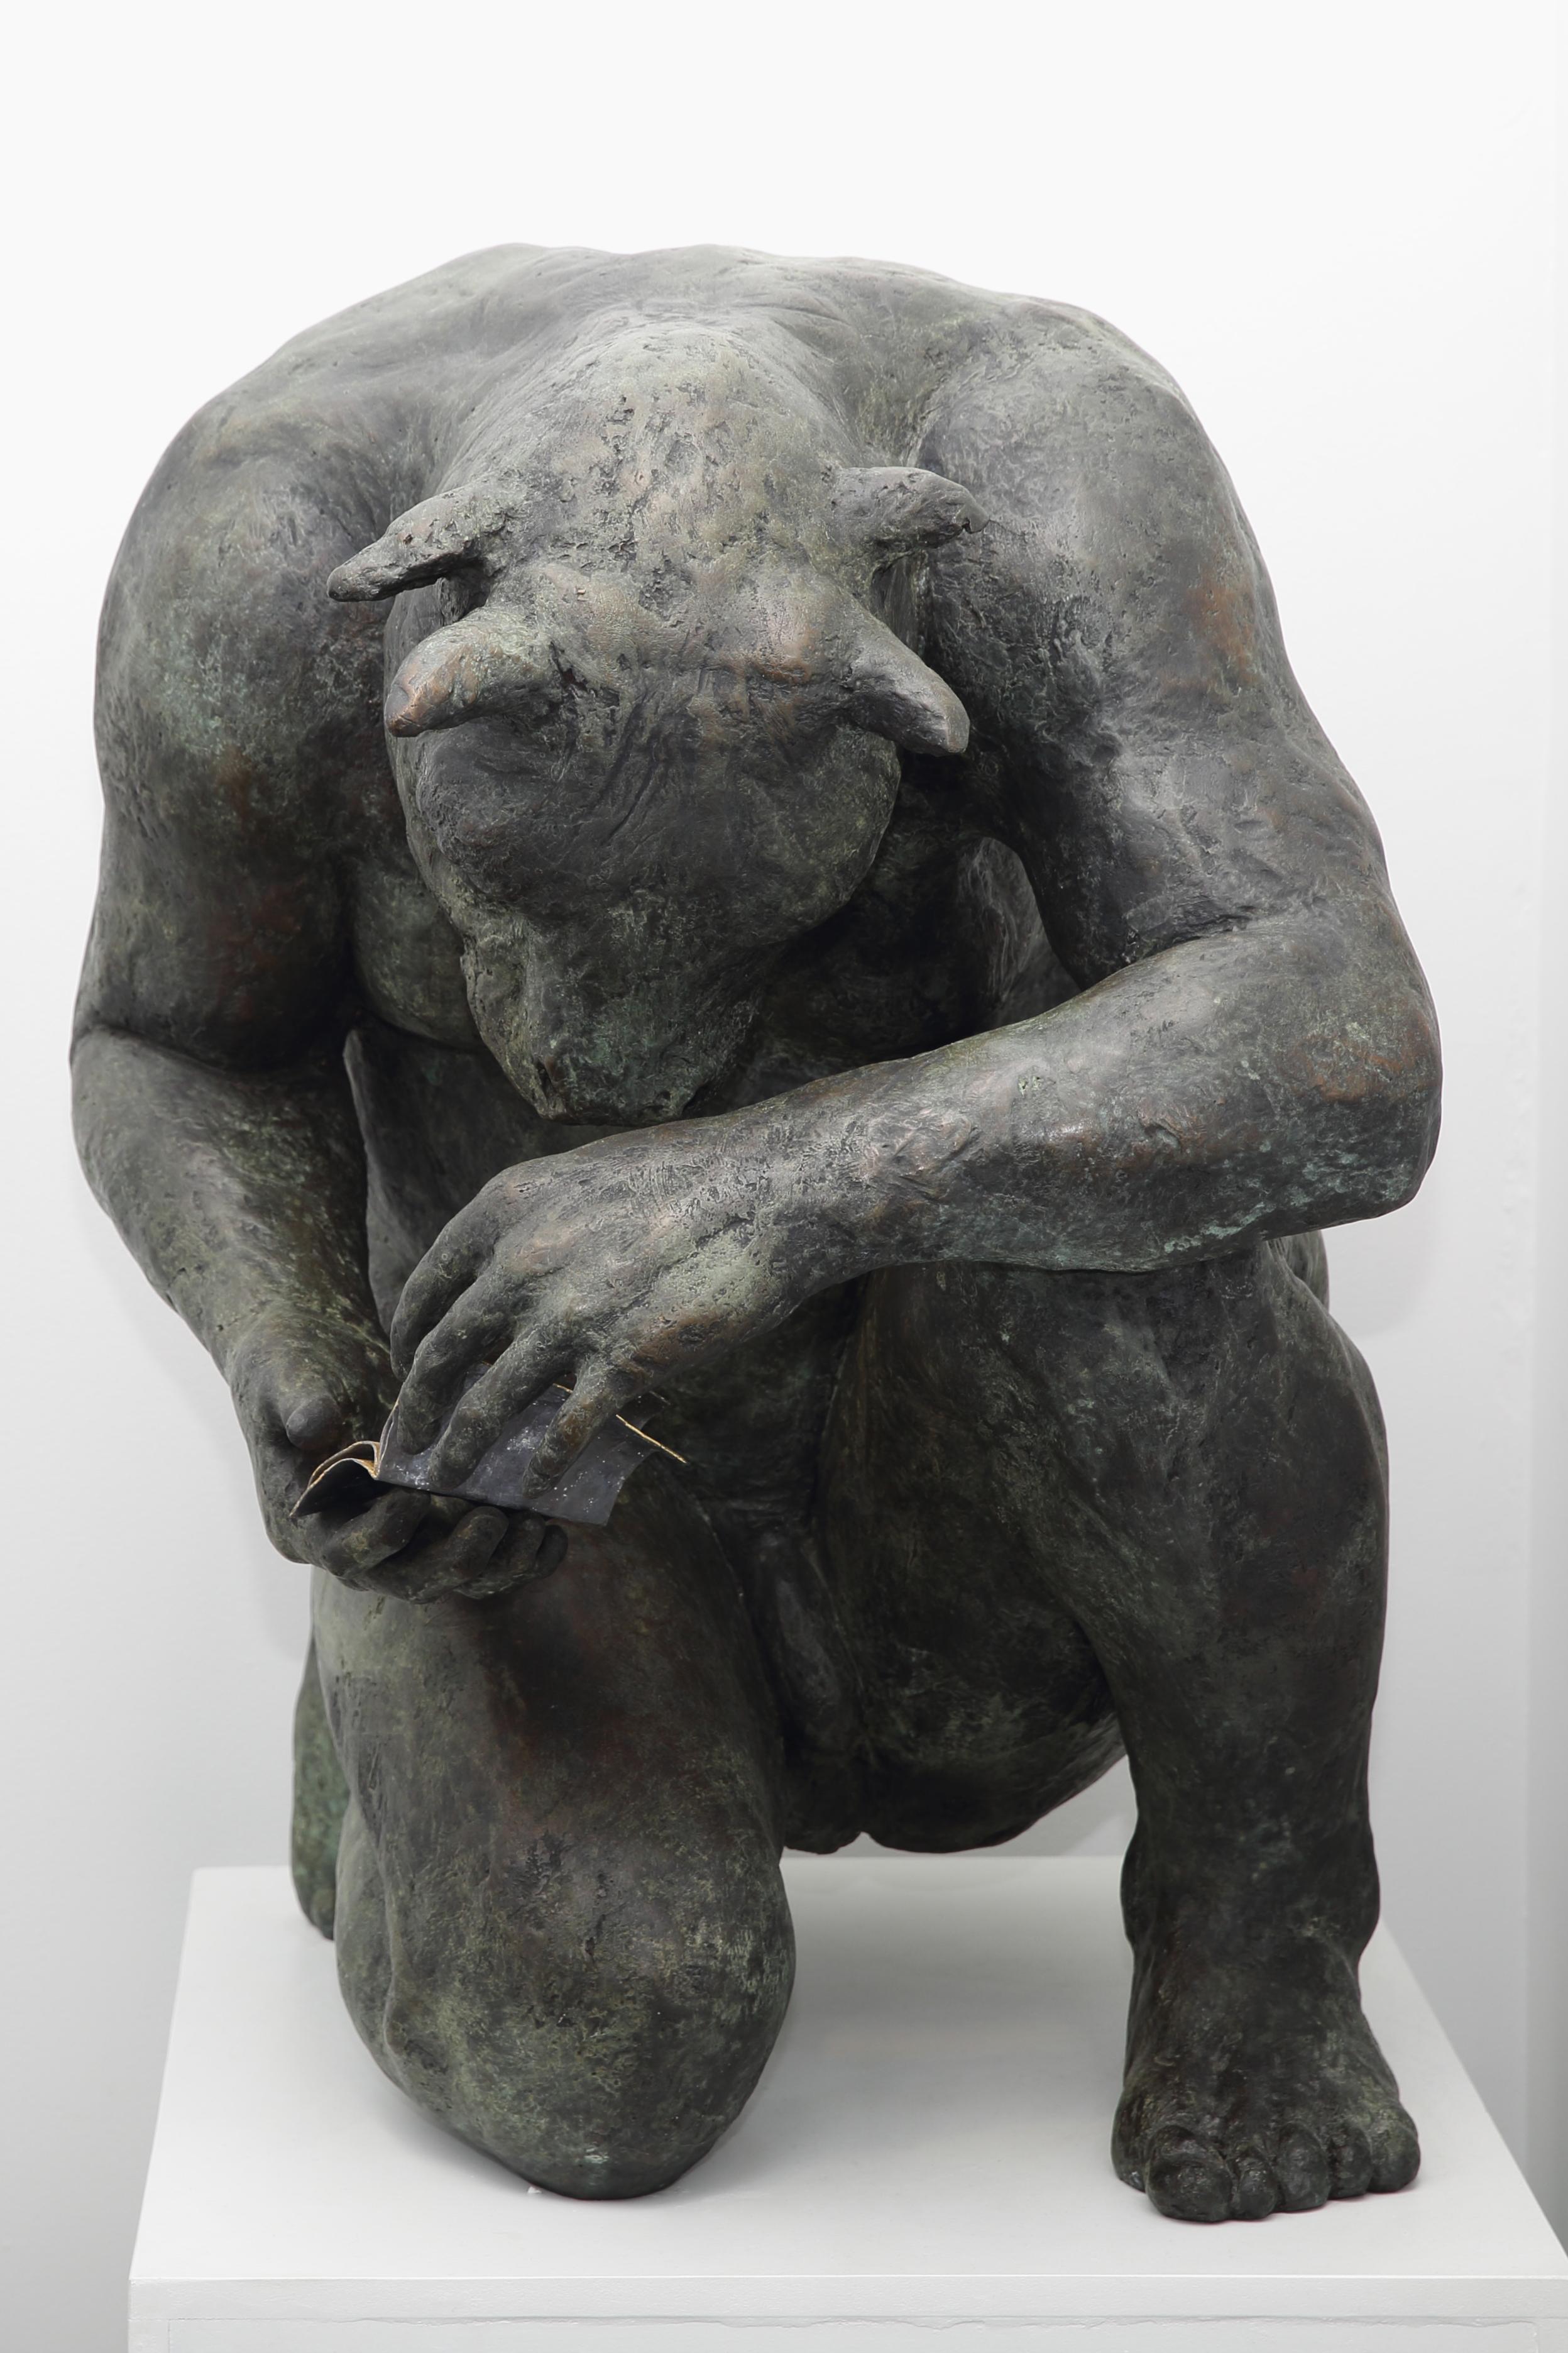 Crouching Minotaur (giant) - Sculpture by Beth Carter